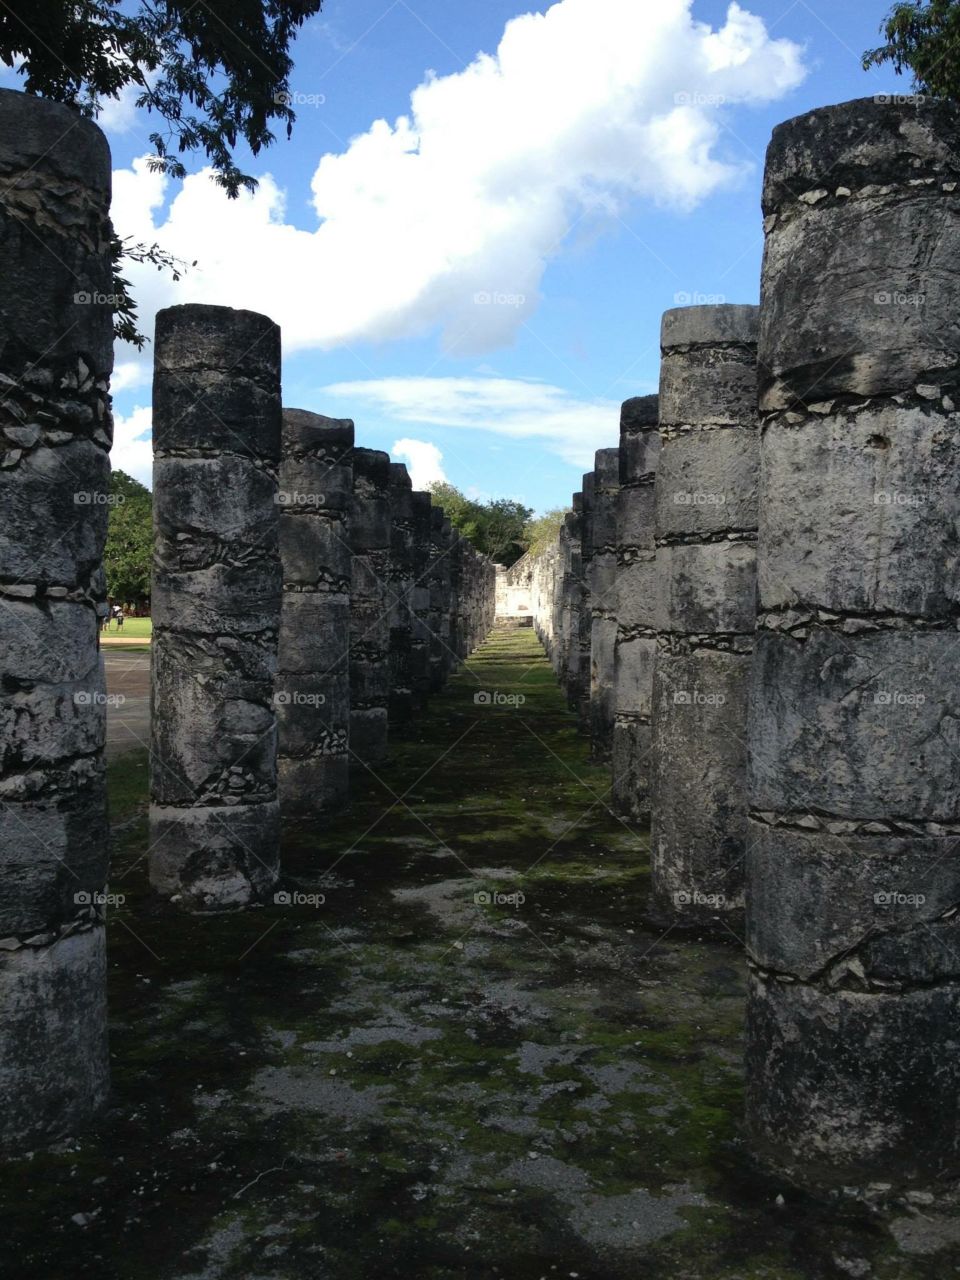 Mayan ruins in Mexico 